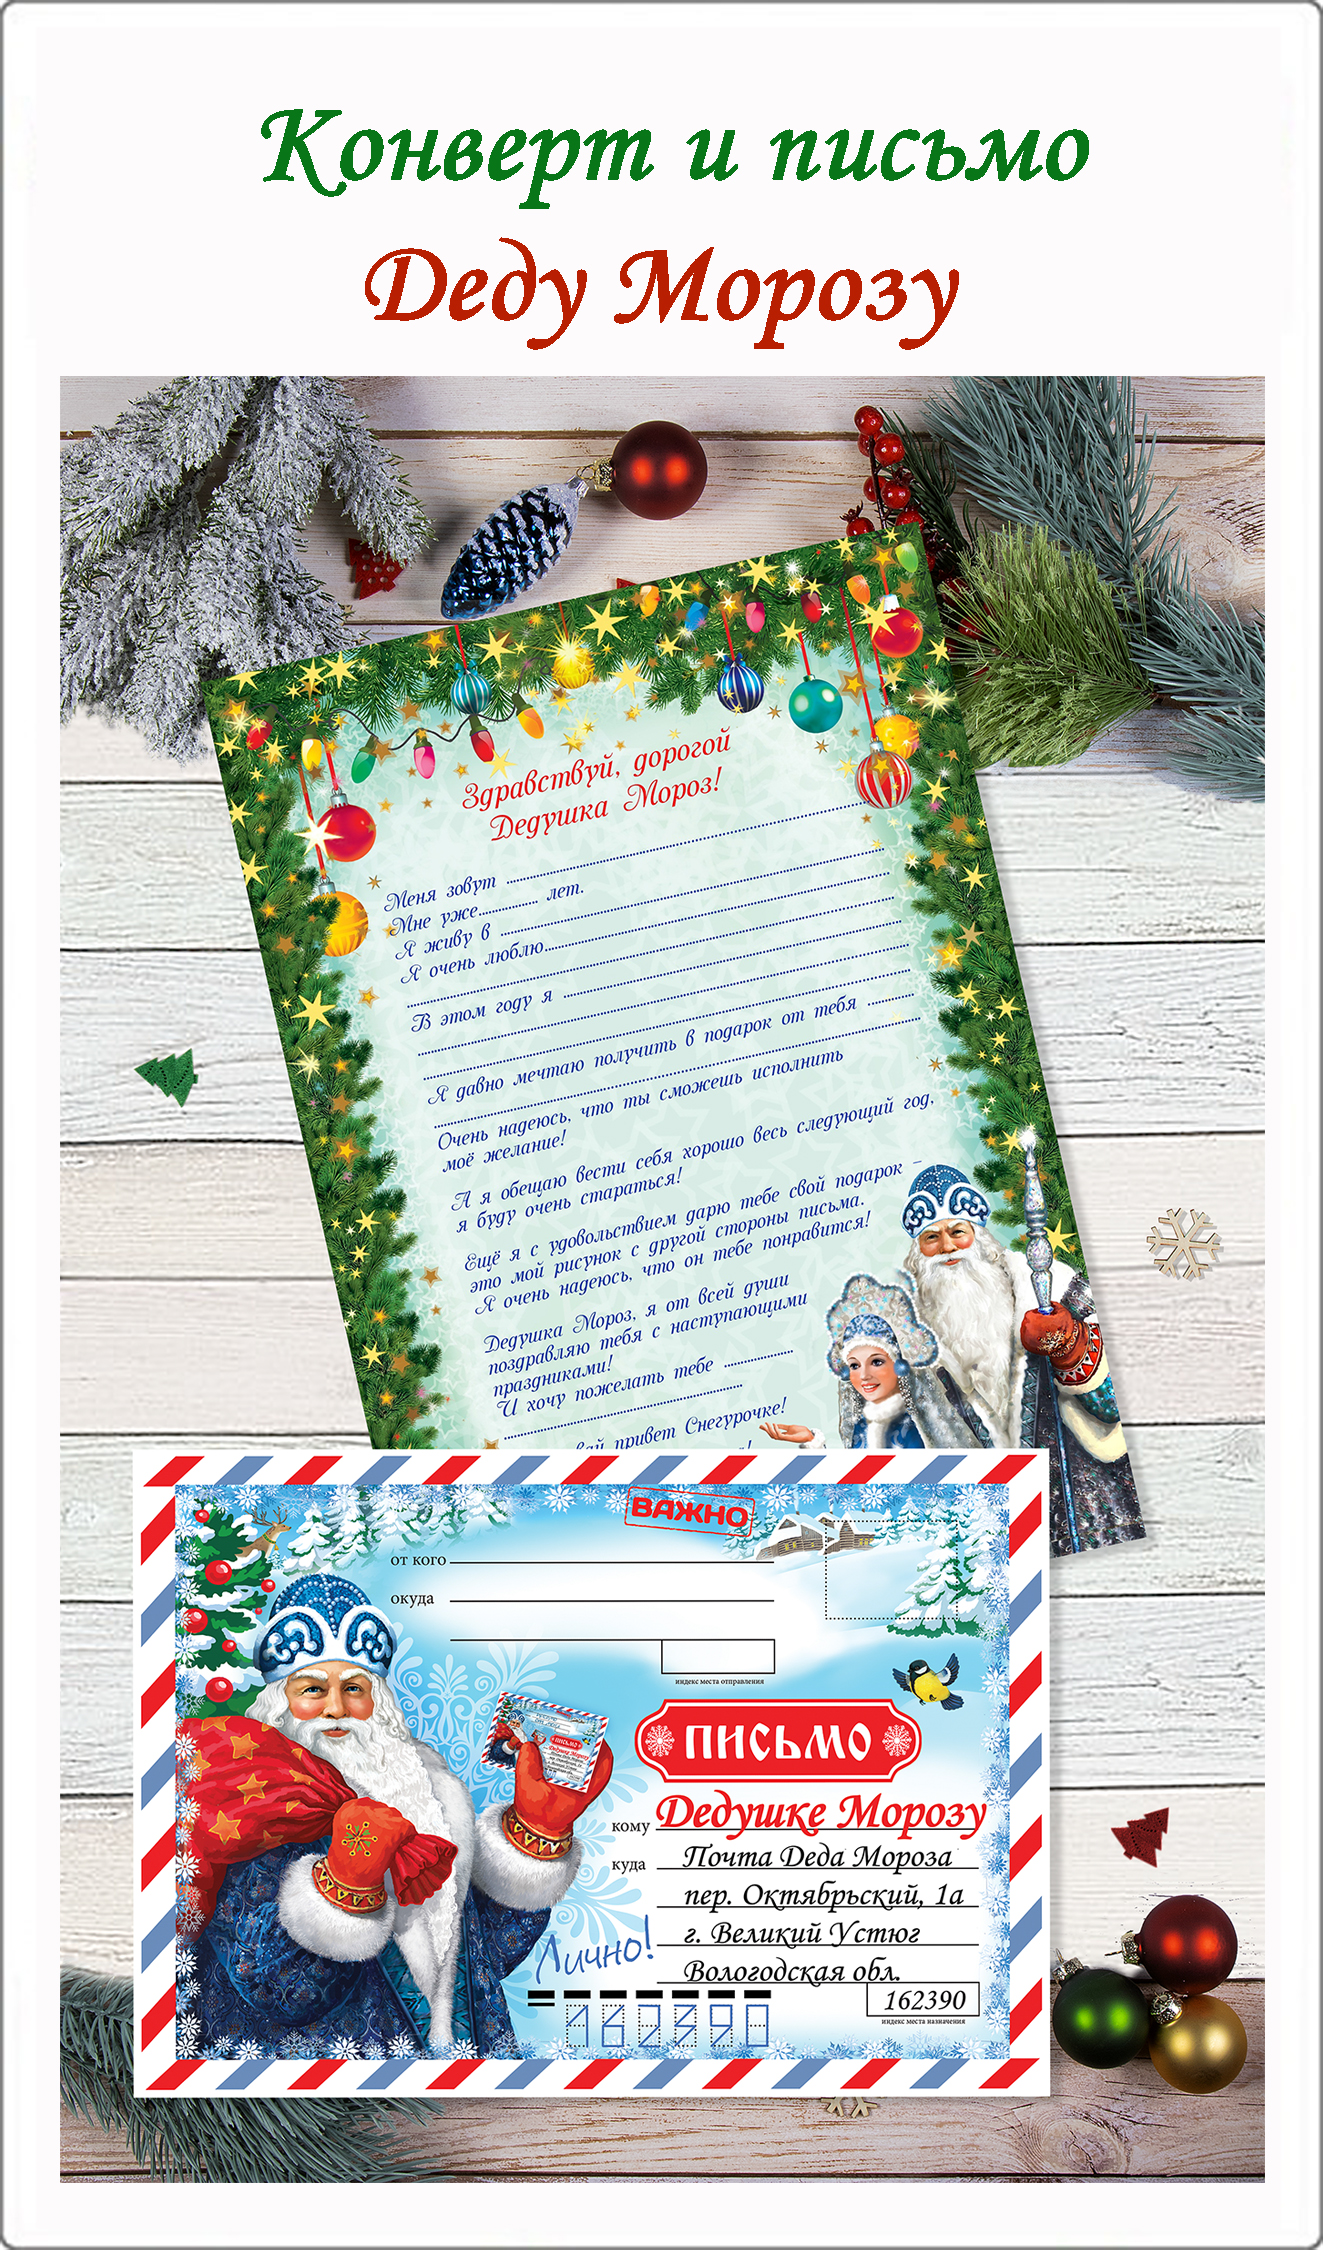 Письмо-конверт от Деда Мороза